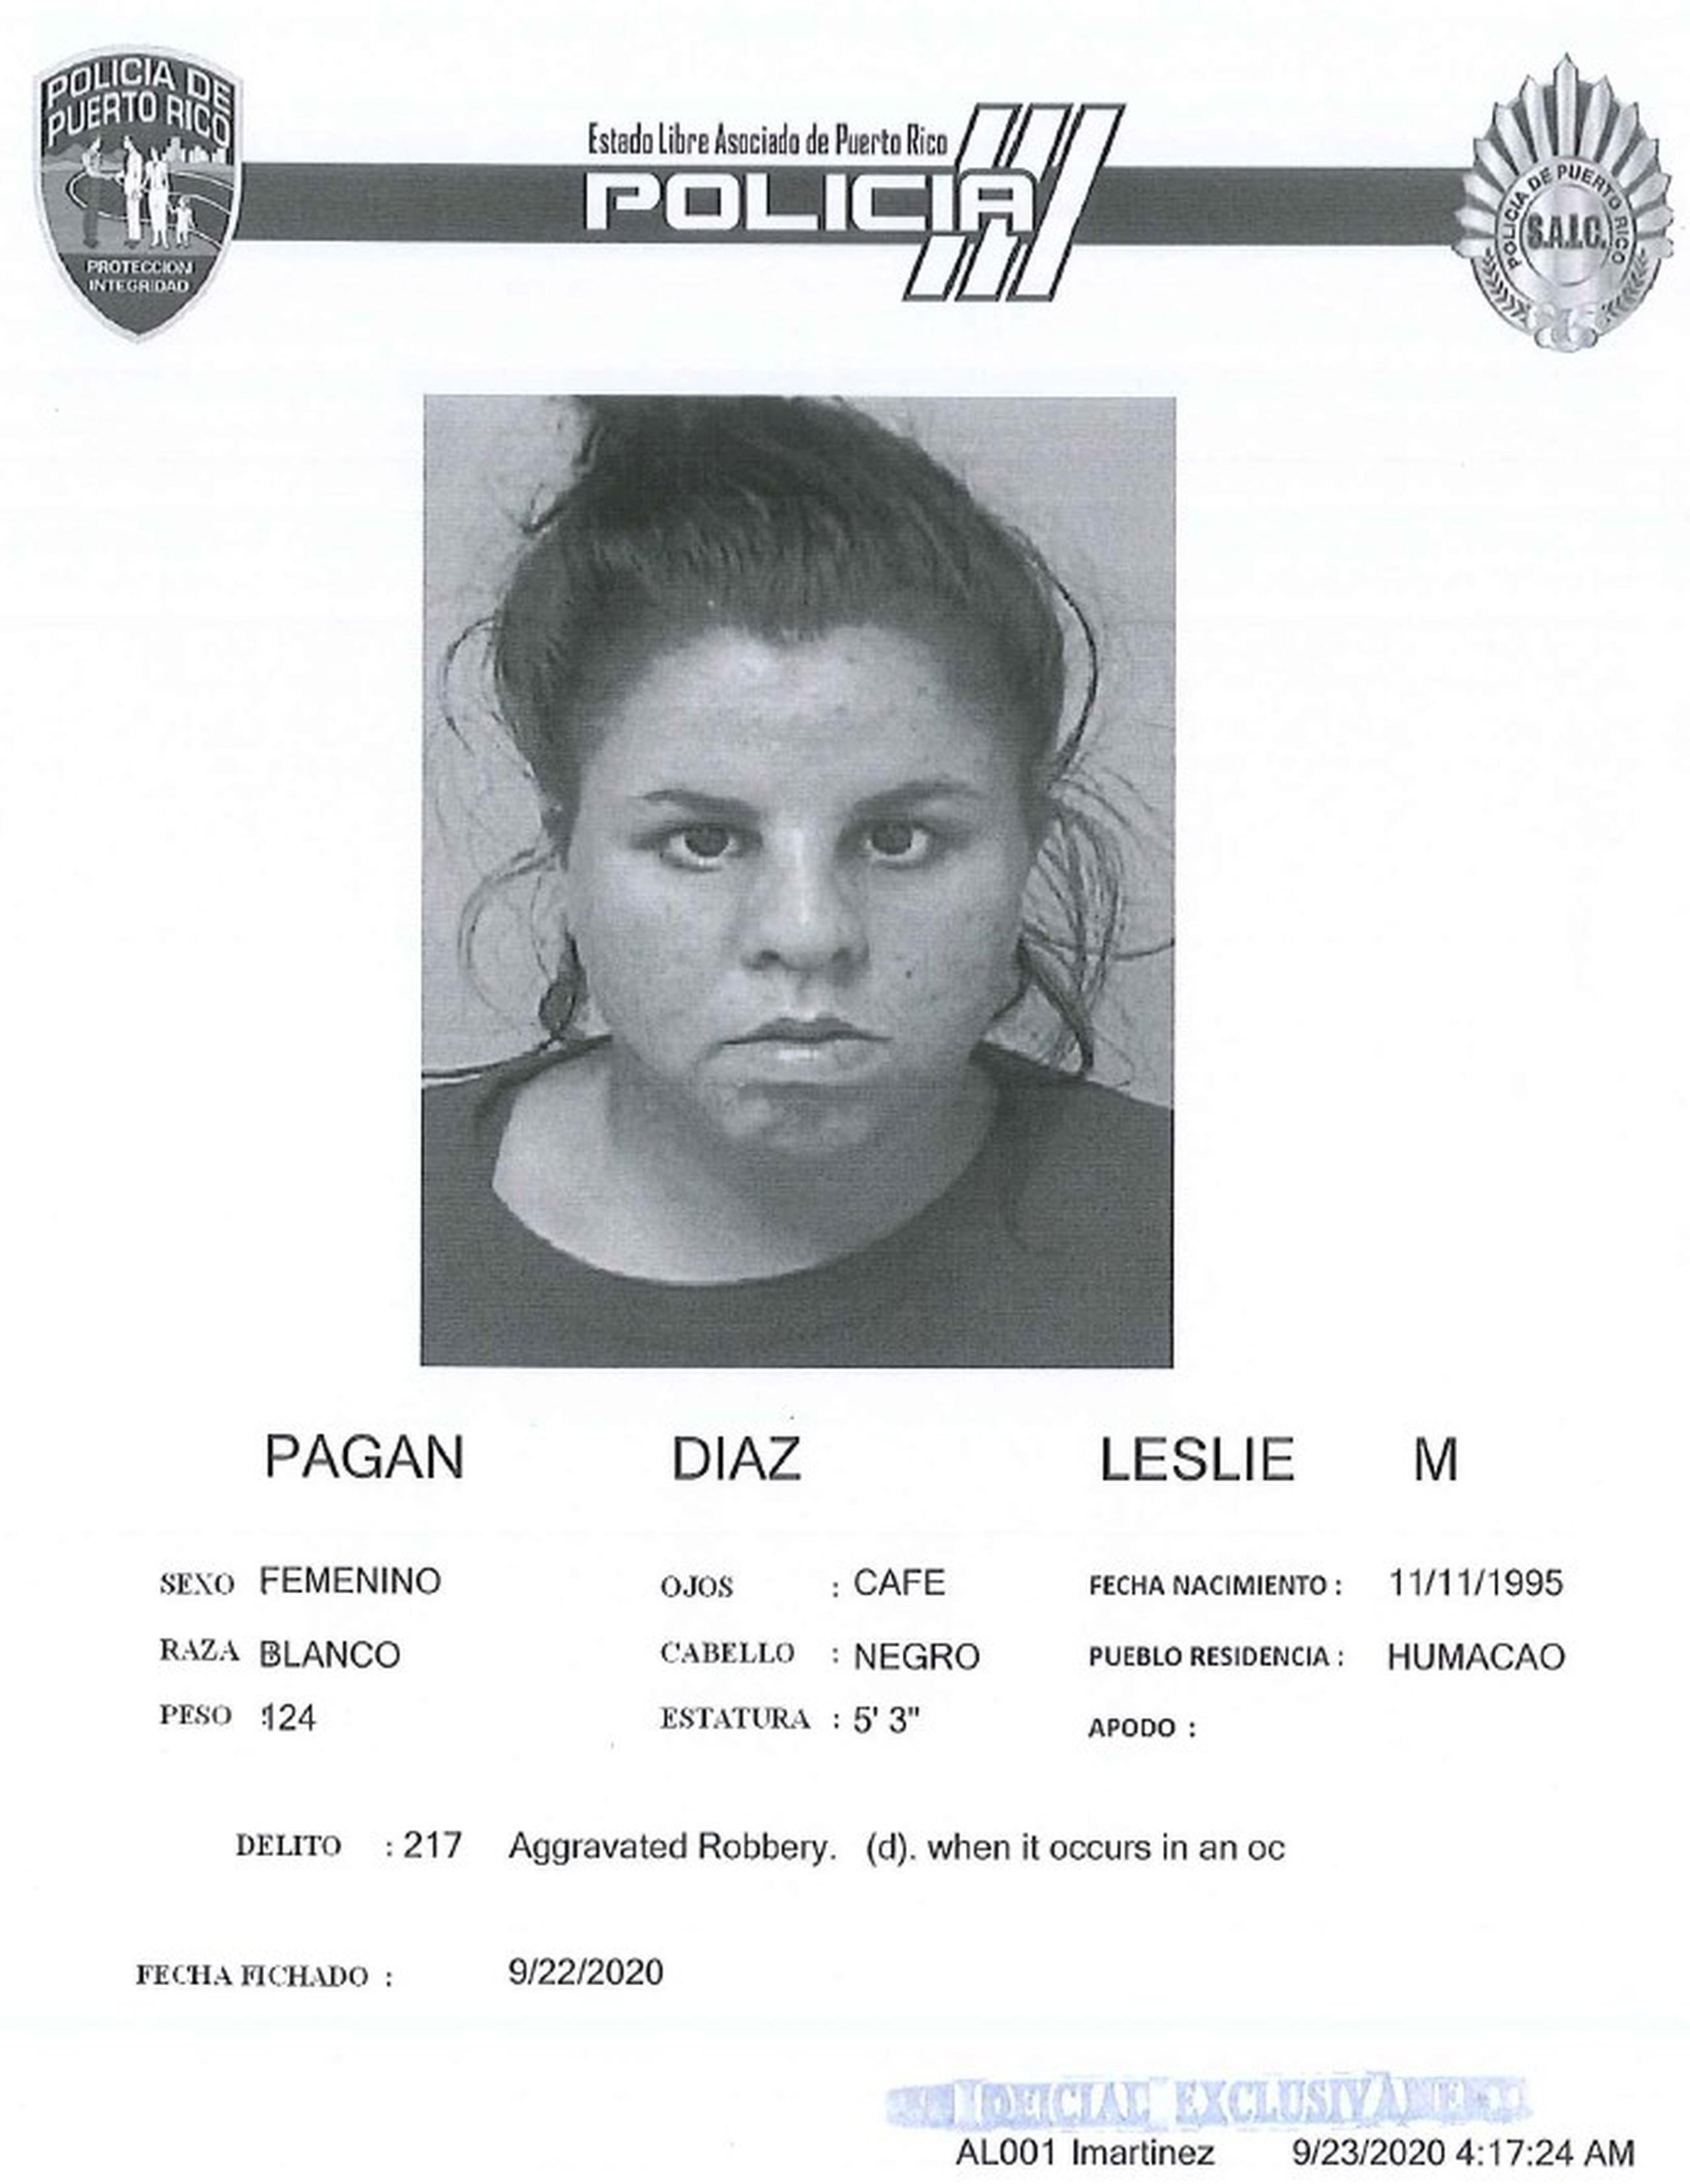 Ficha policíaca de Leslie M. Pagán Díaz.